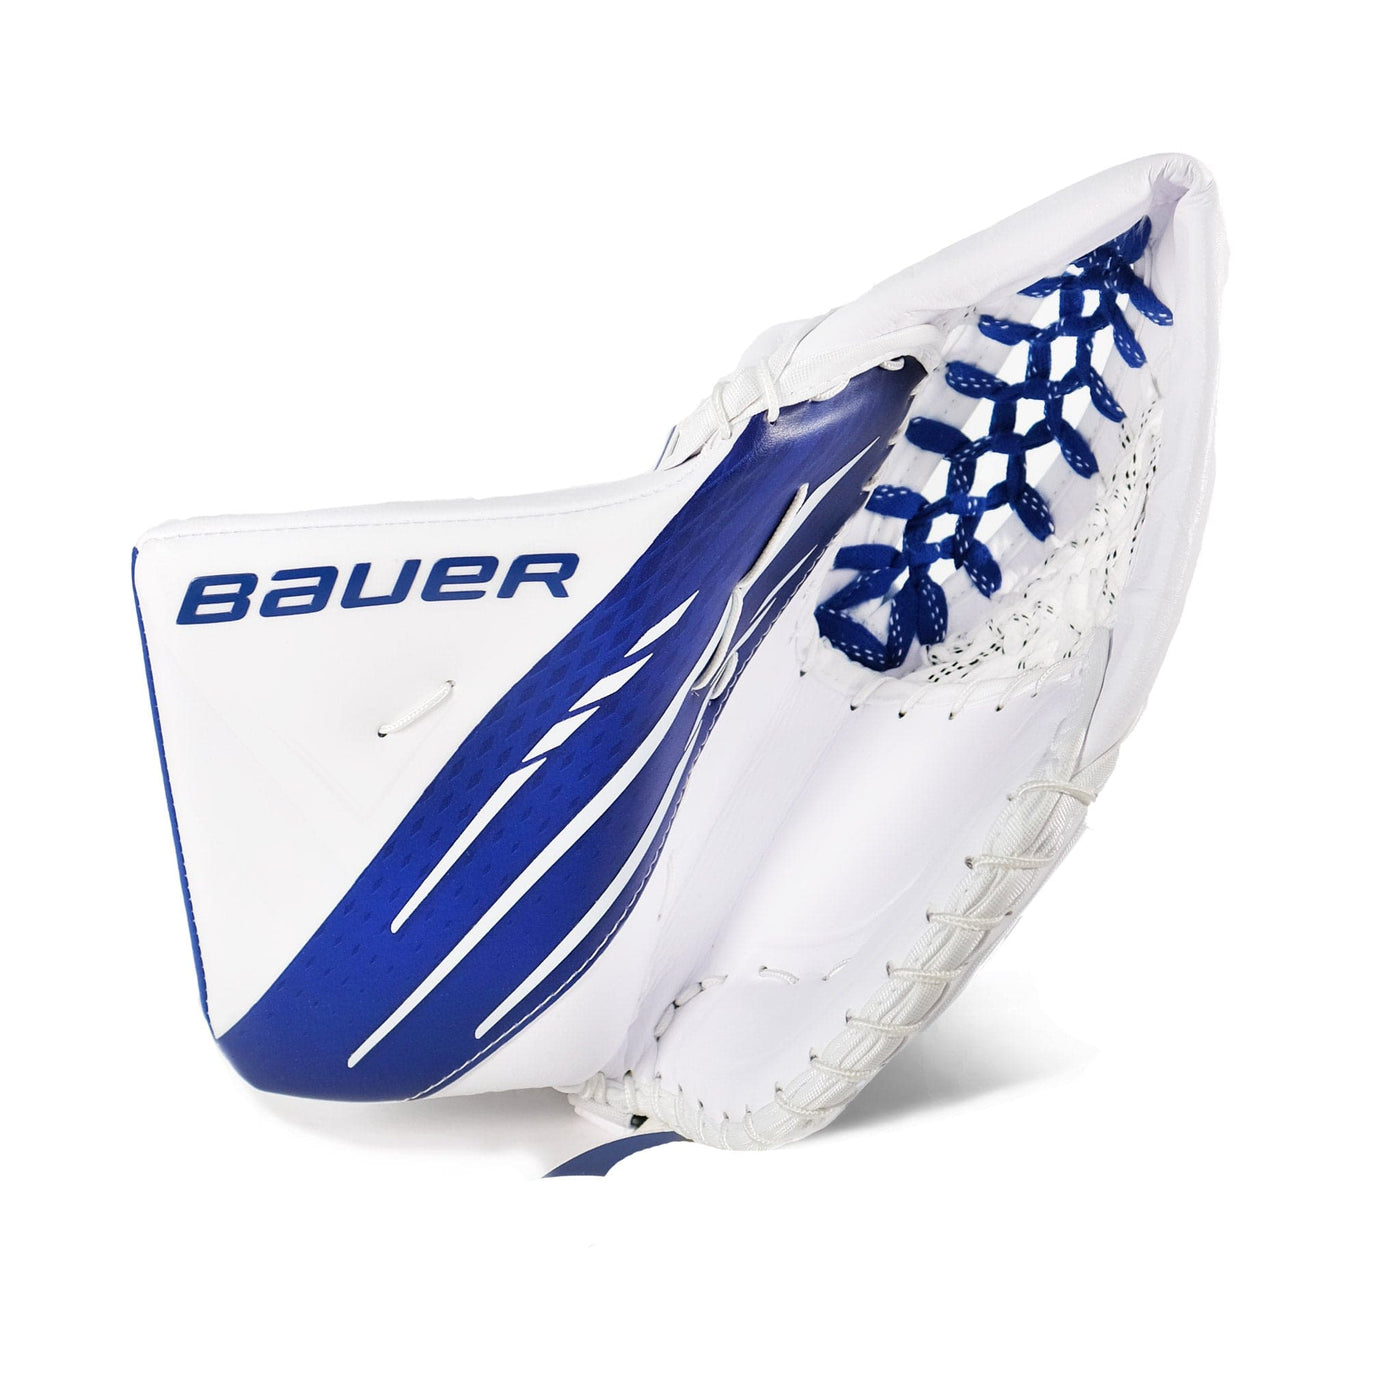 Bauer Vapor HyperLite Senior Goalie Catcher - Pro Palm - The Hockey Shop Source For Sports